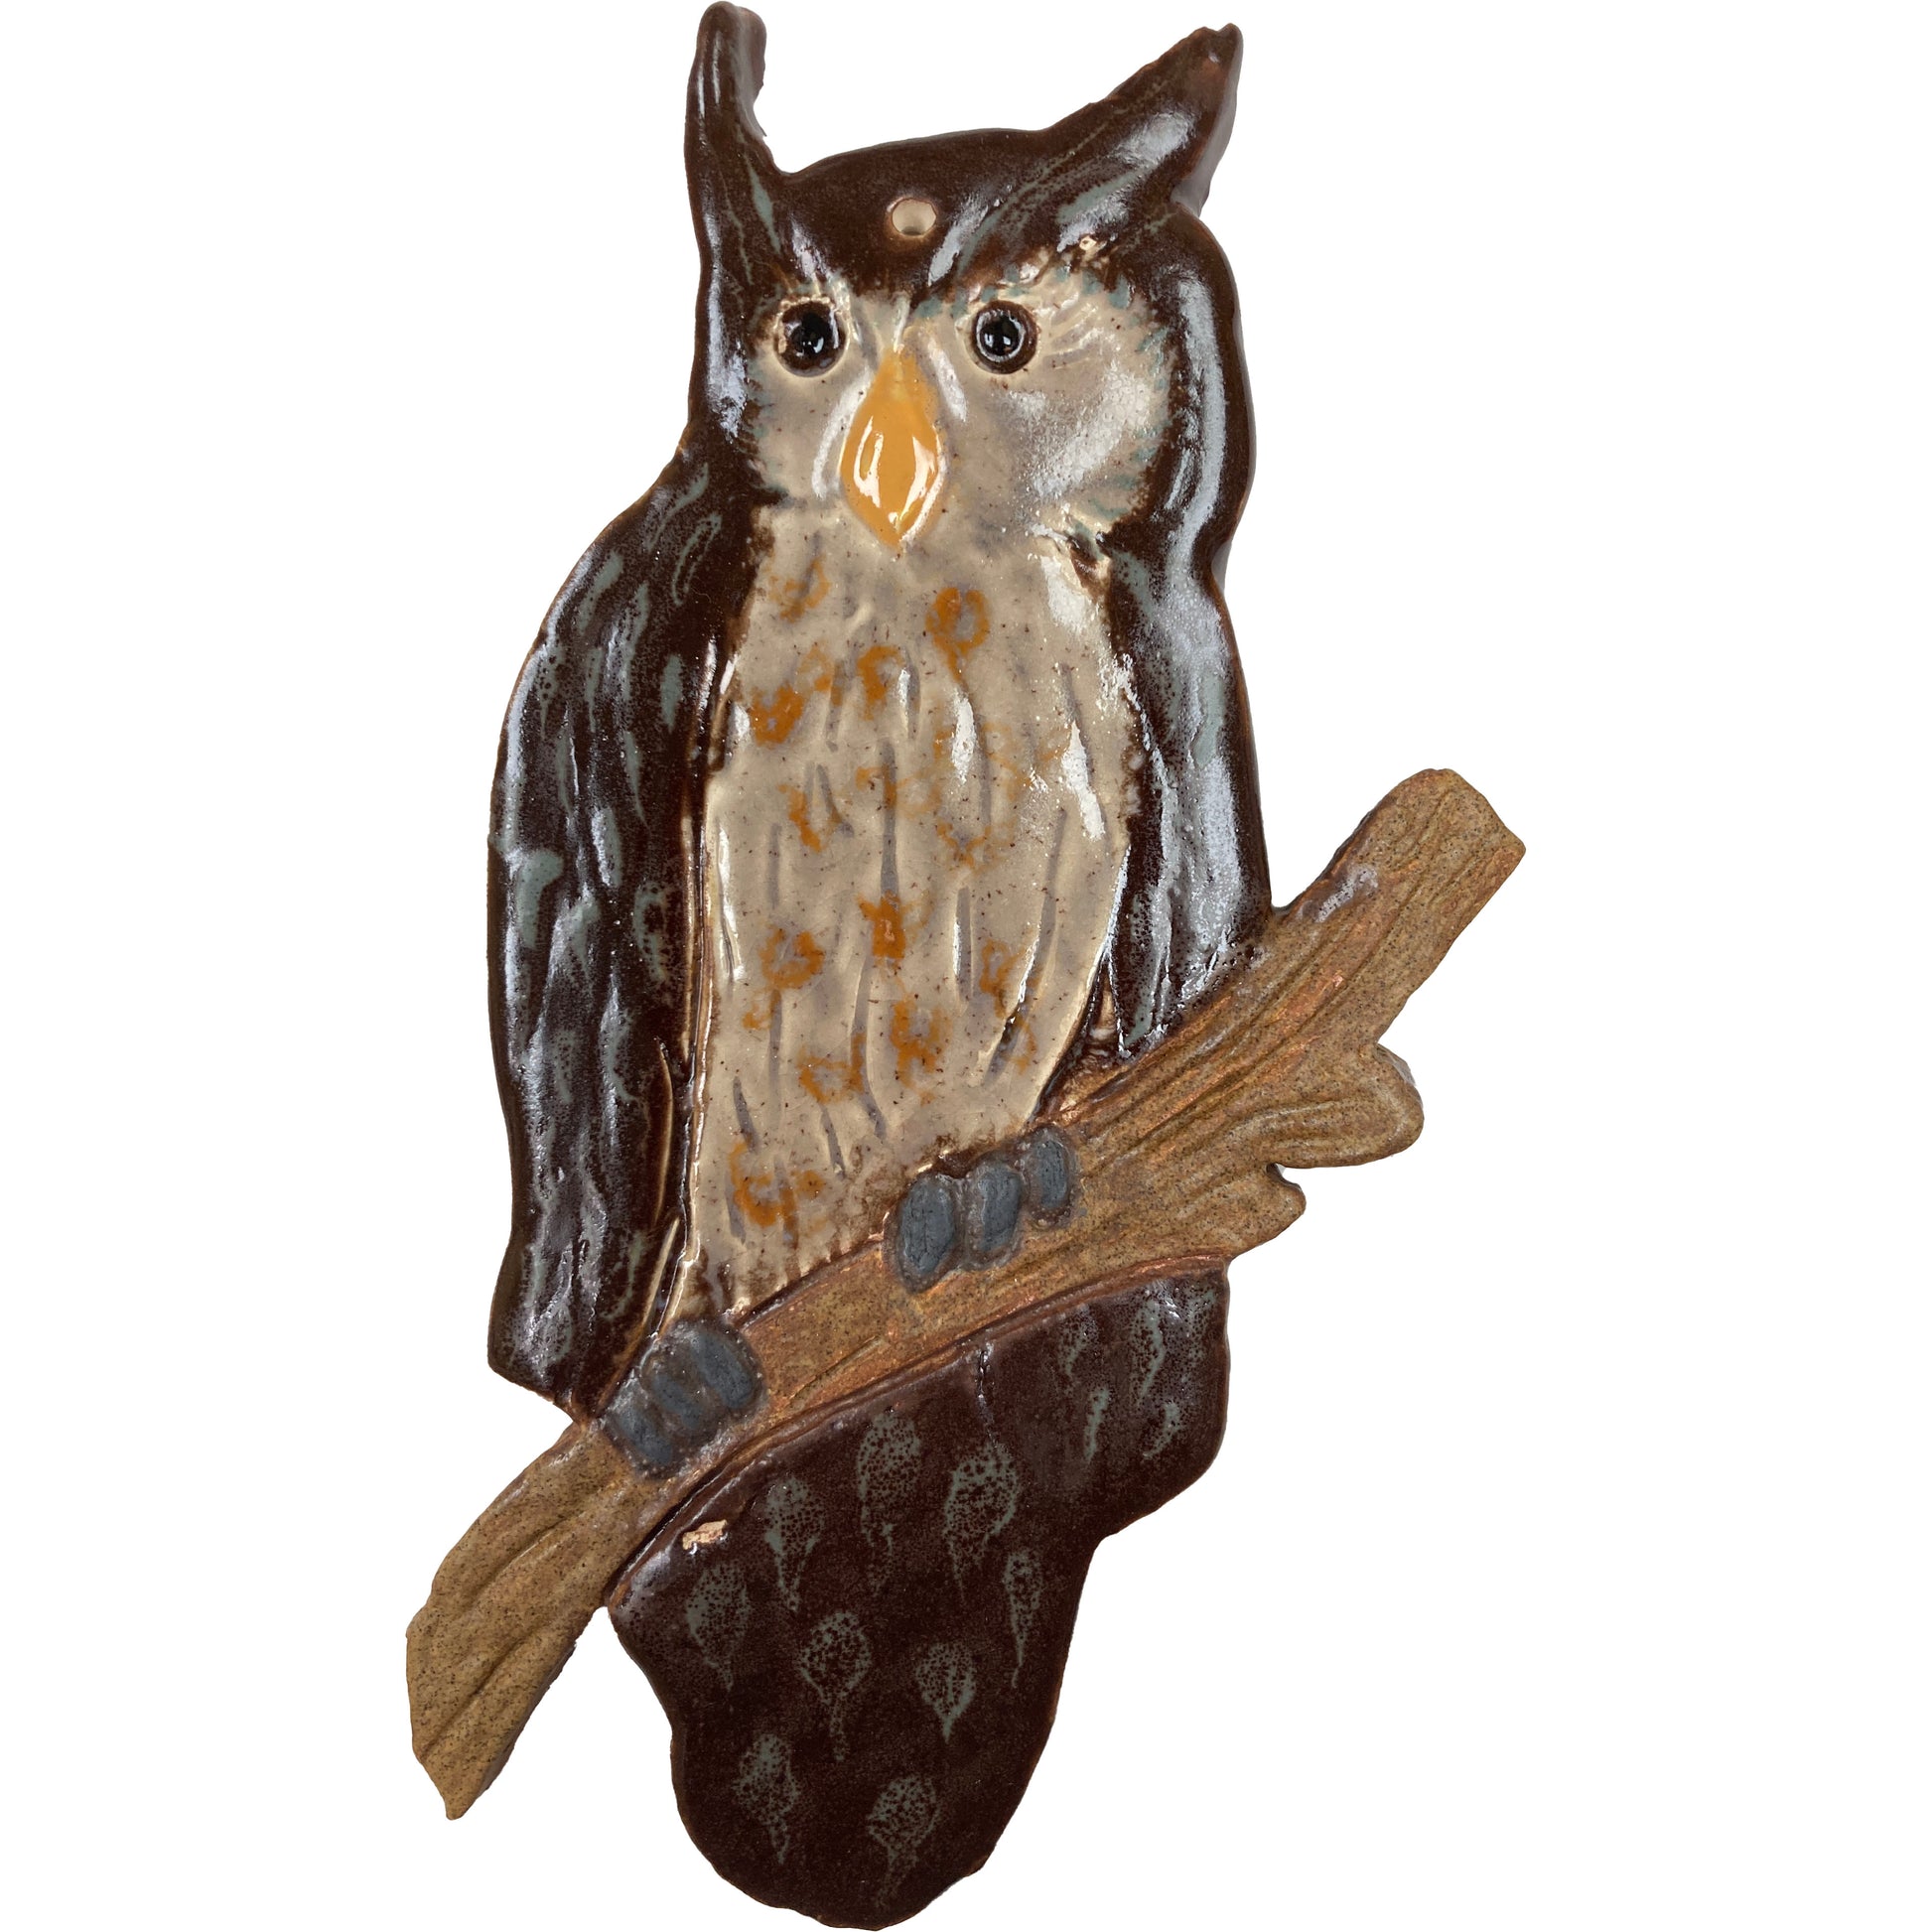 WATCH Resources Art Guild - Ceramic Arts Handmade Clay Crafts 8-inch x 5.5-inch Glazed Owl made by Dave Sullivan